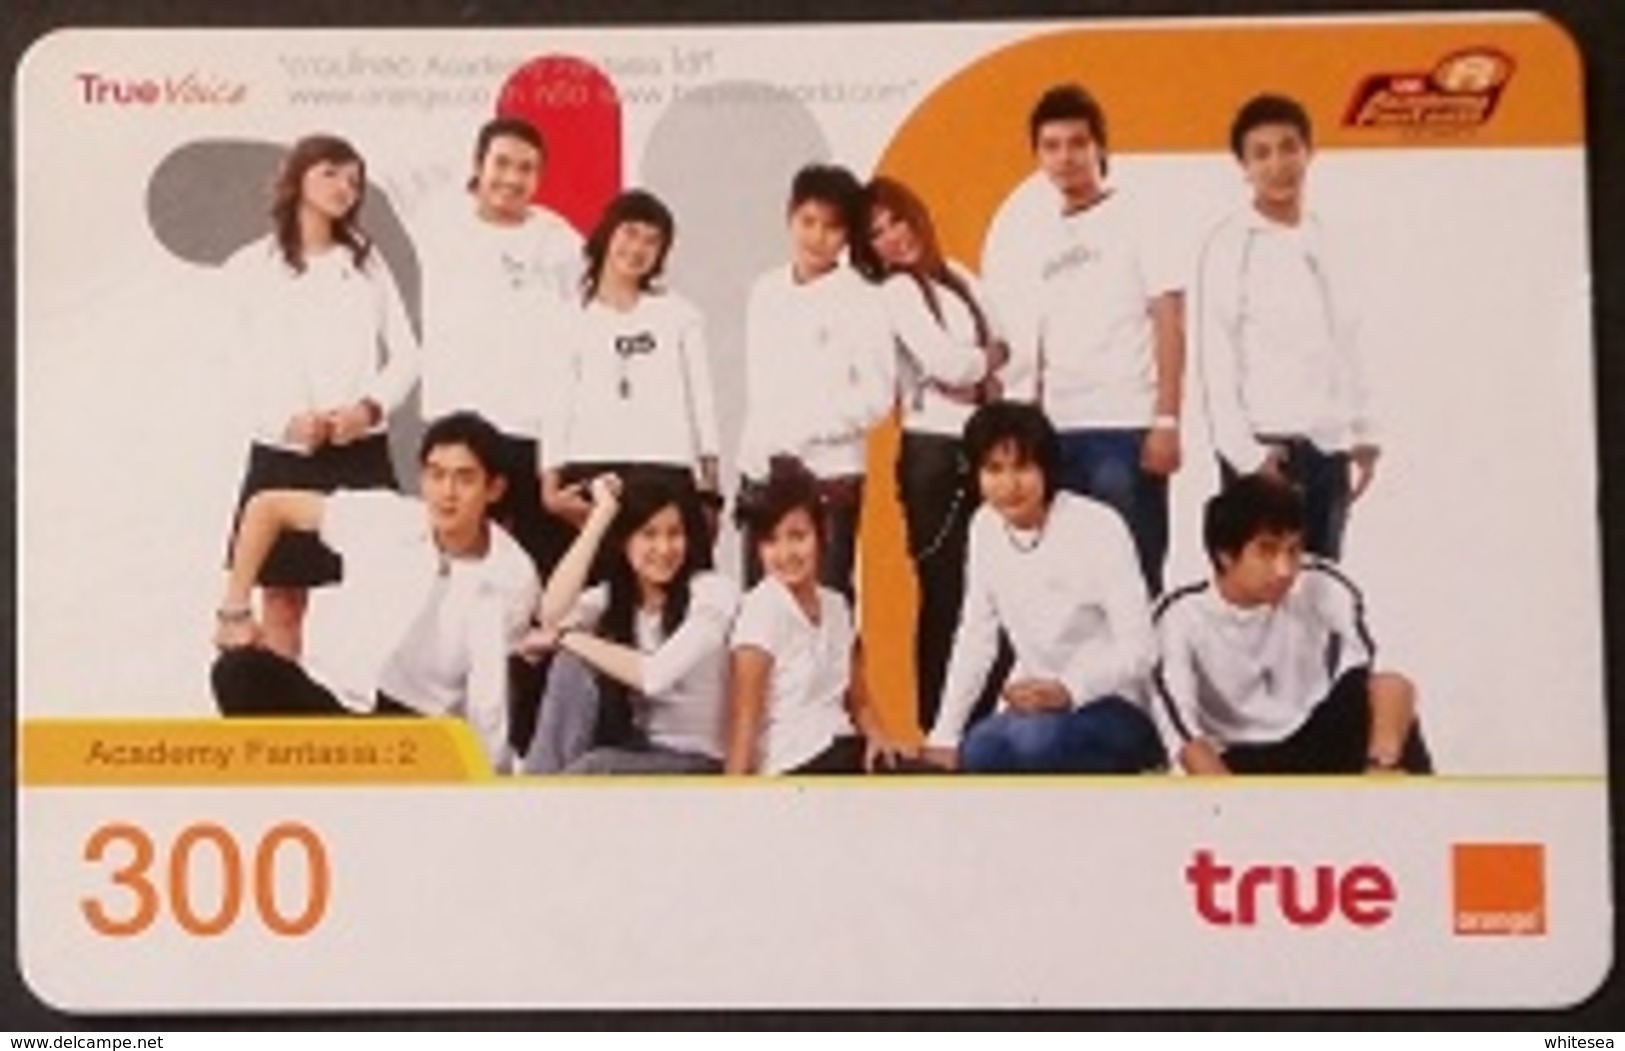 Mobilecard Thailand - True / Orange - Musik - Academy Fantasia 2 (2) - Thailand